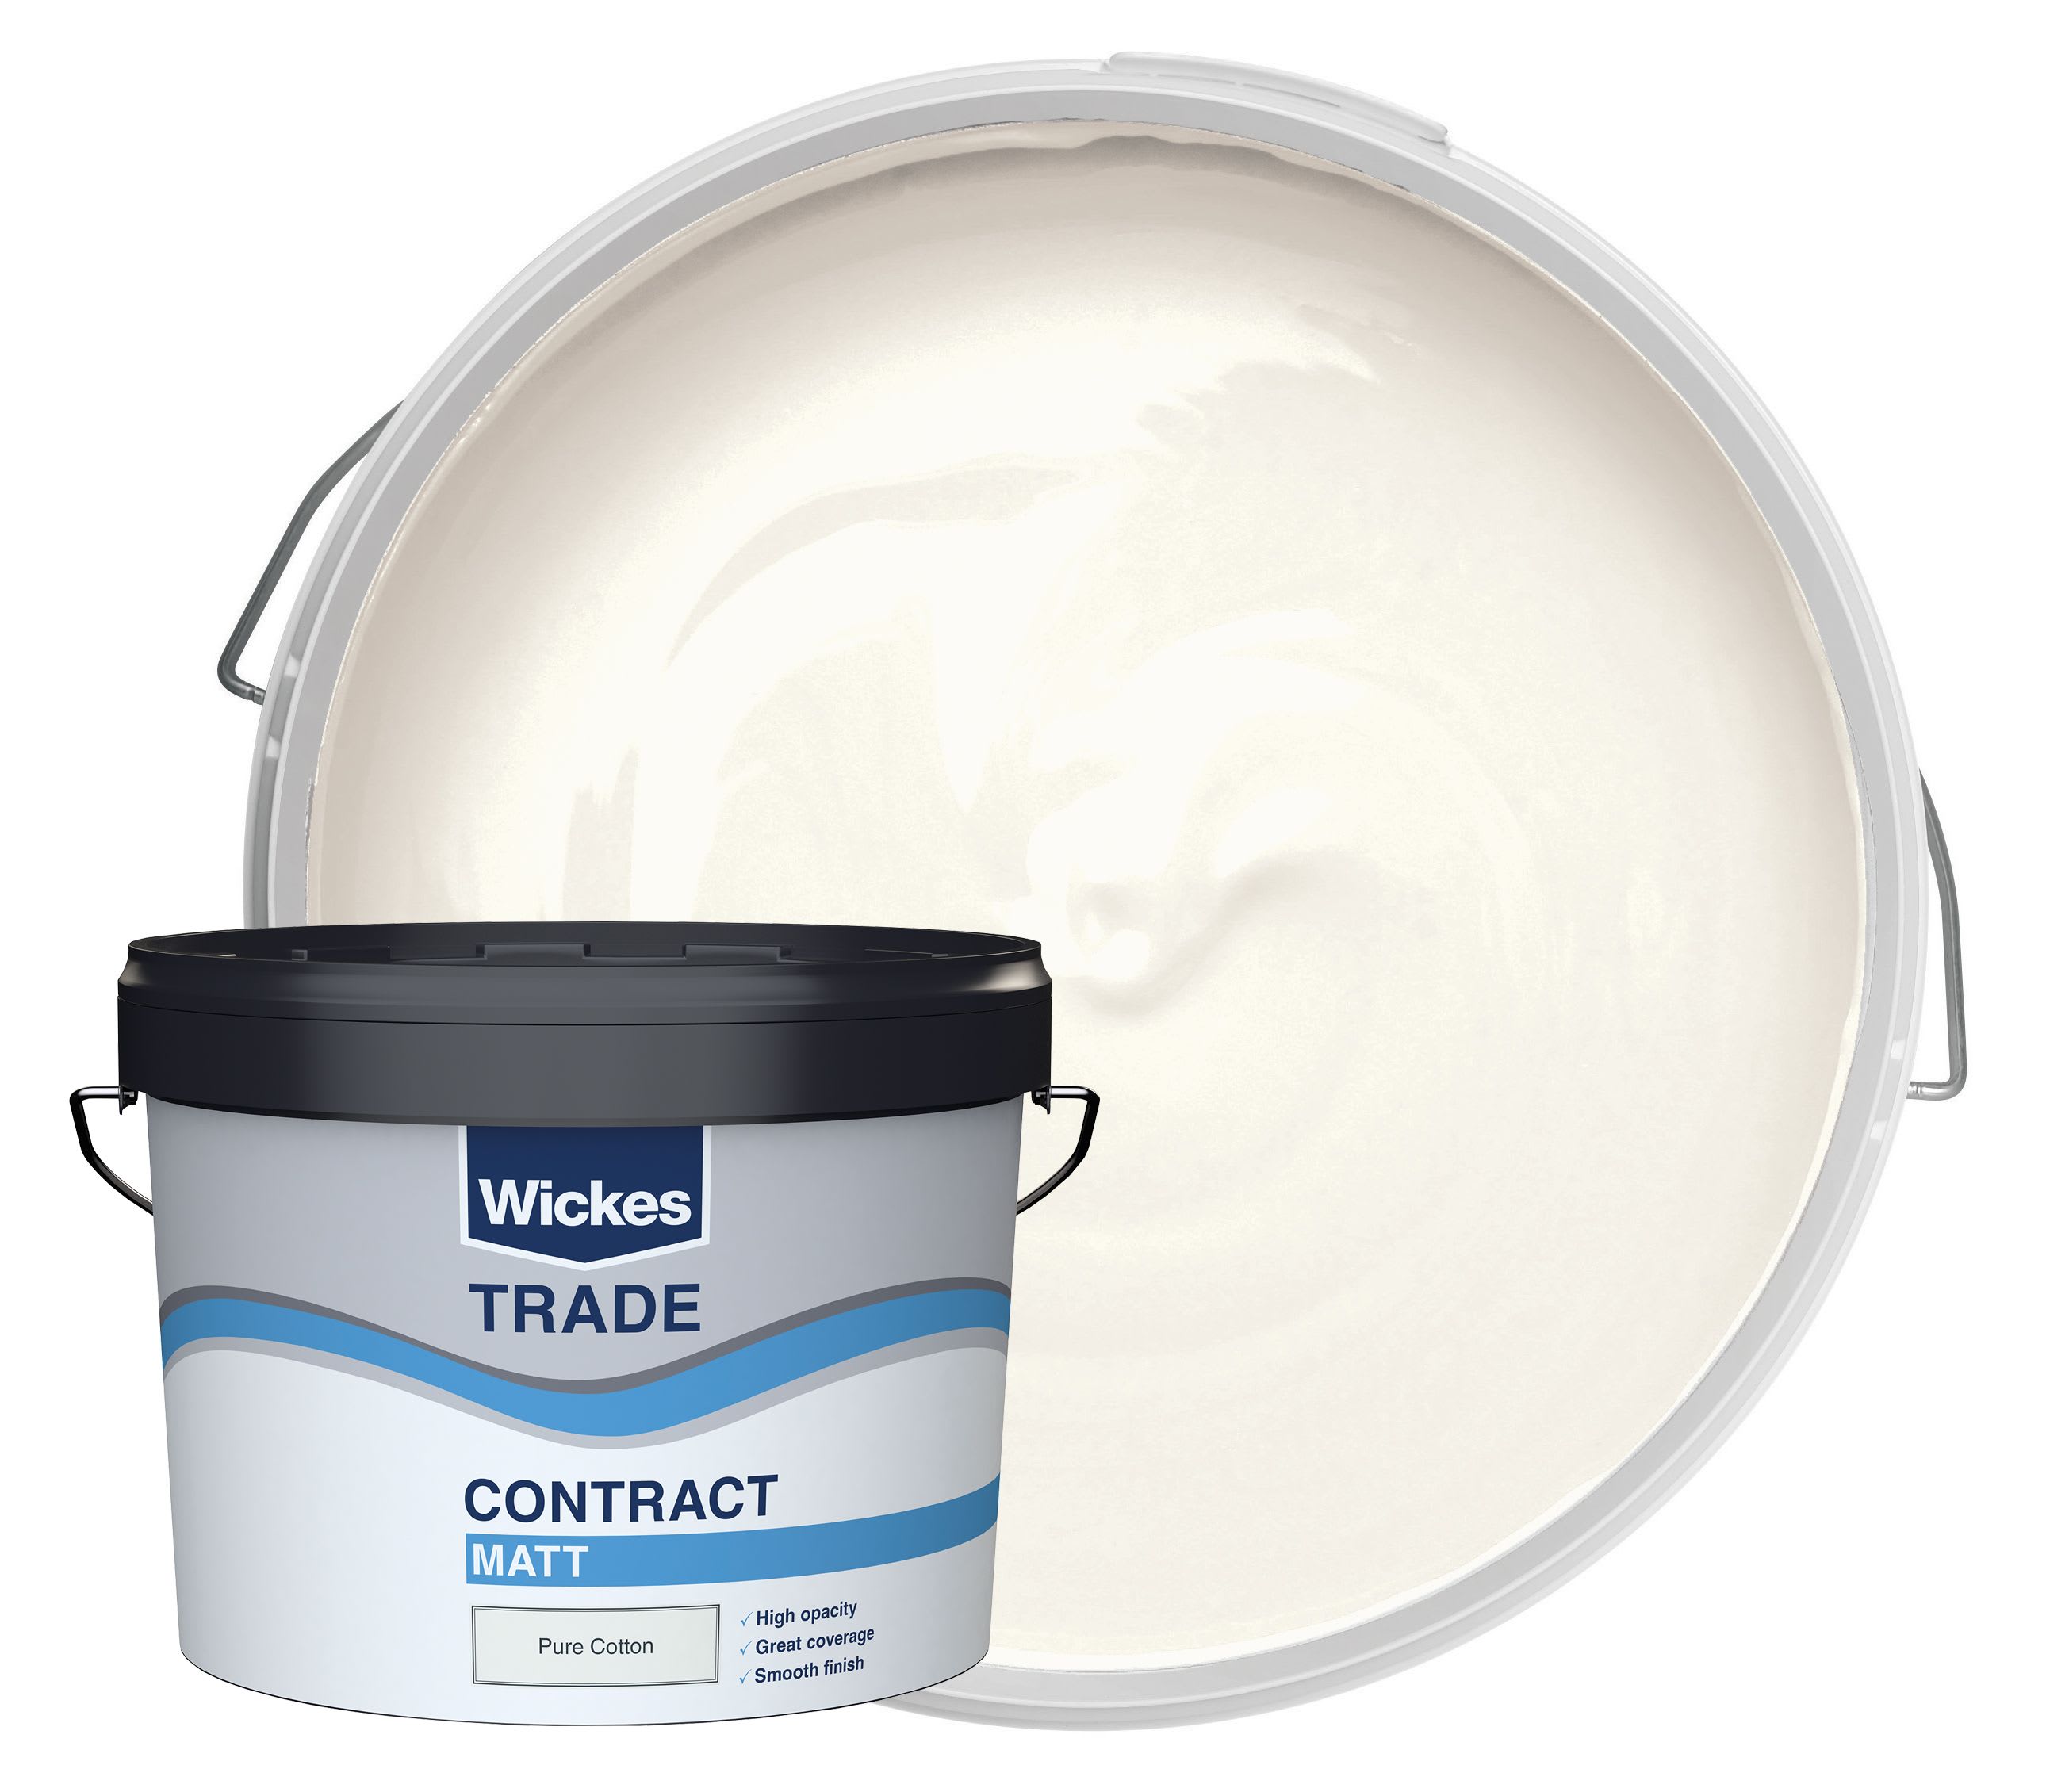 Wickes Trade Contract Matt Emulsion Paint - Pure